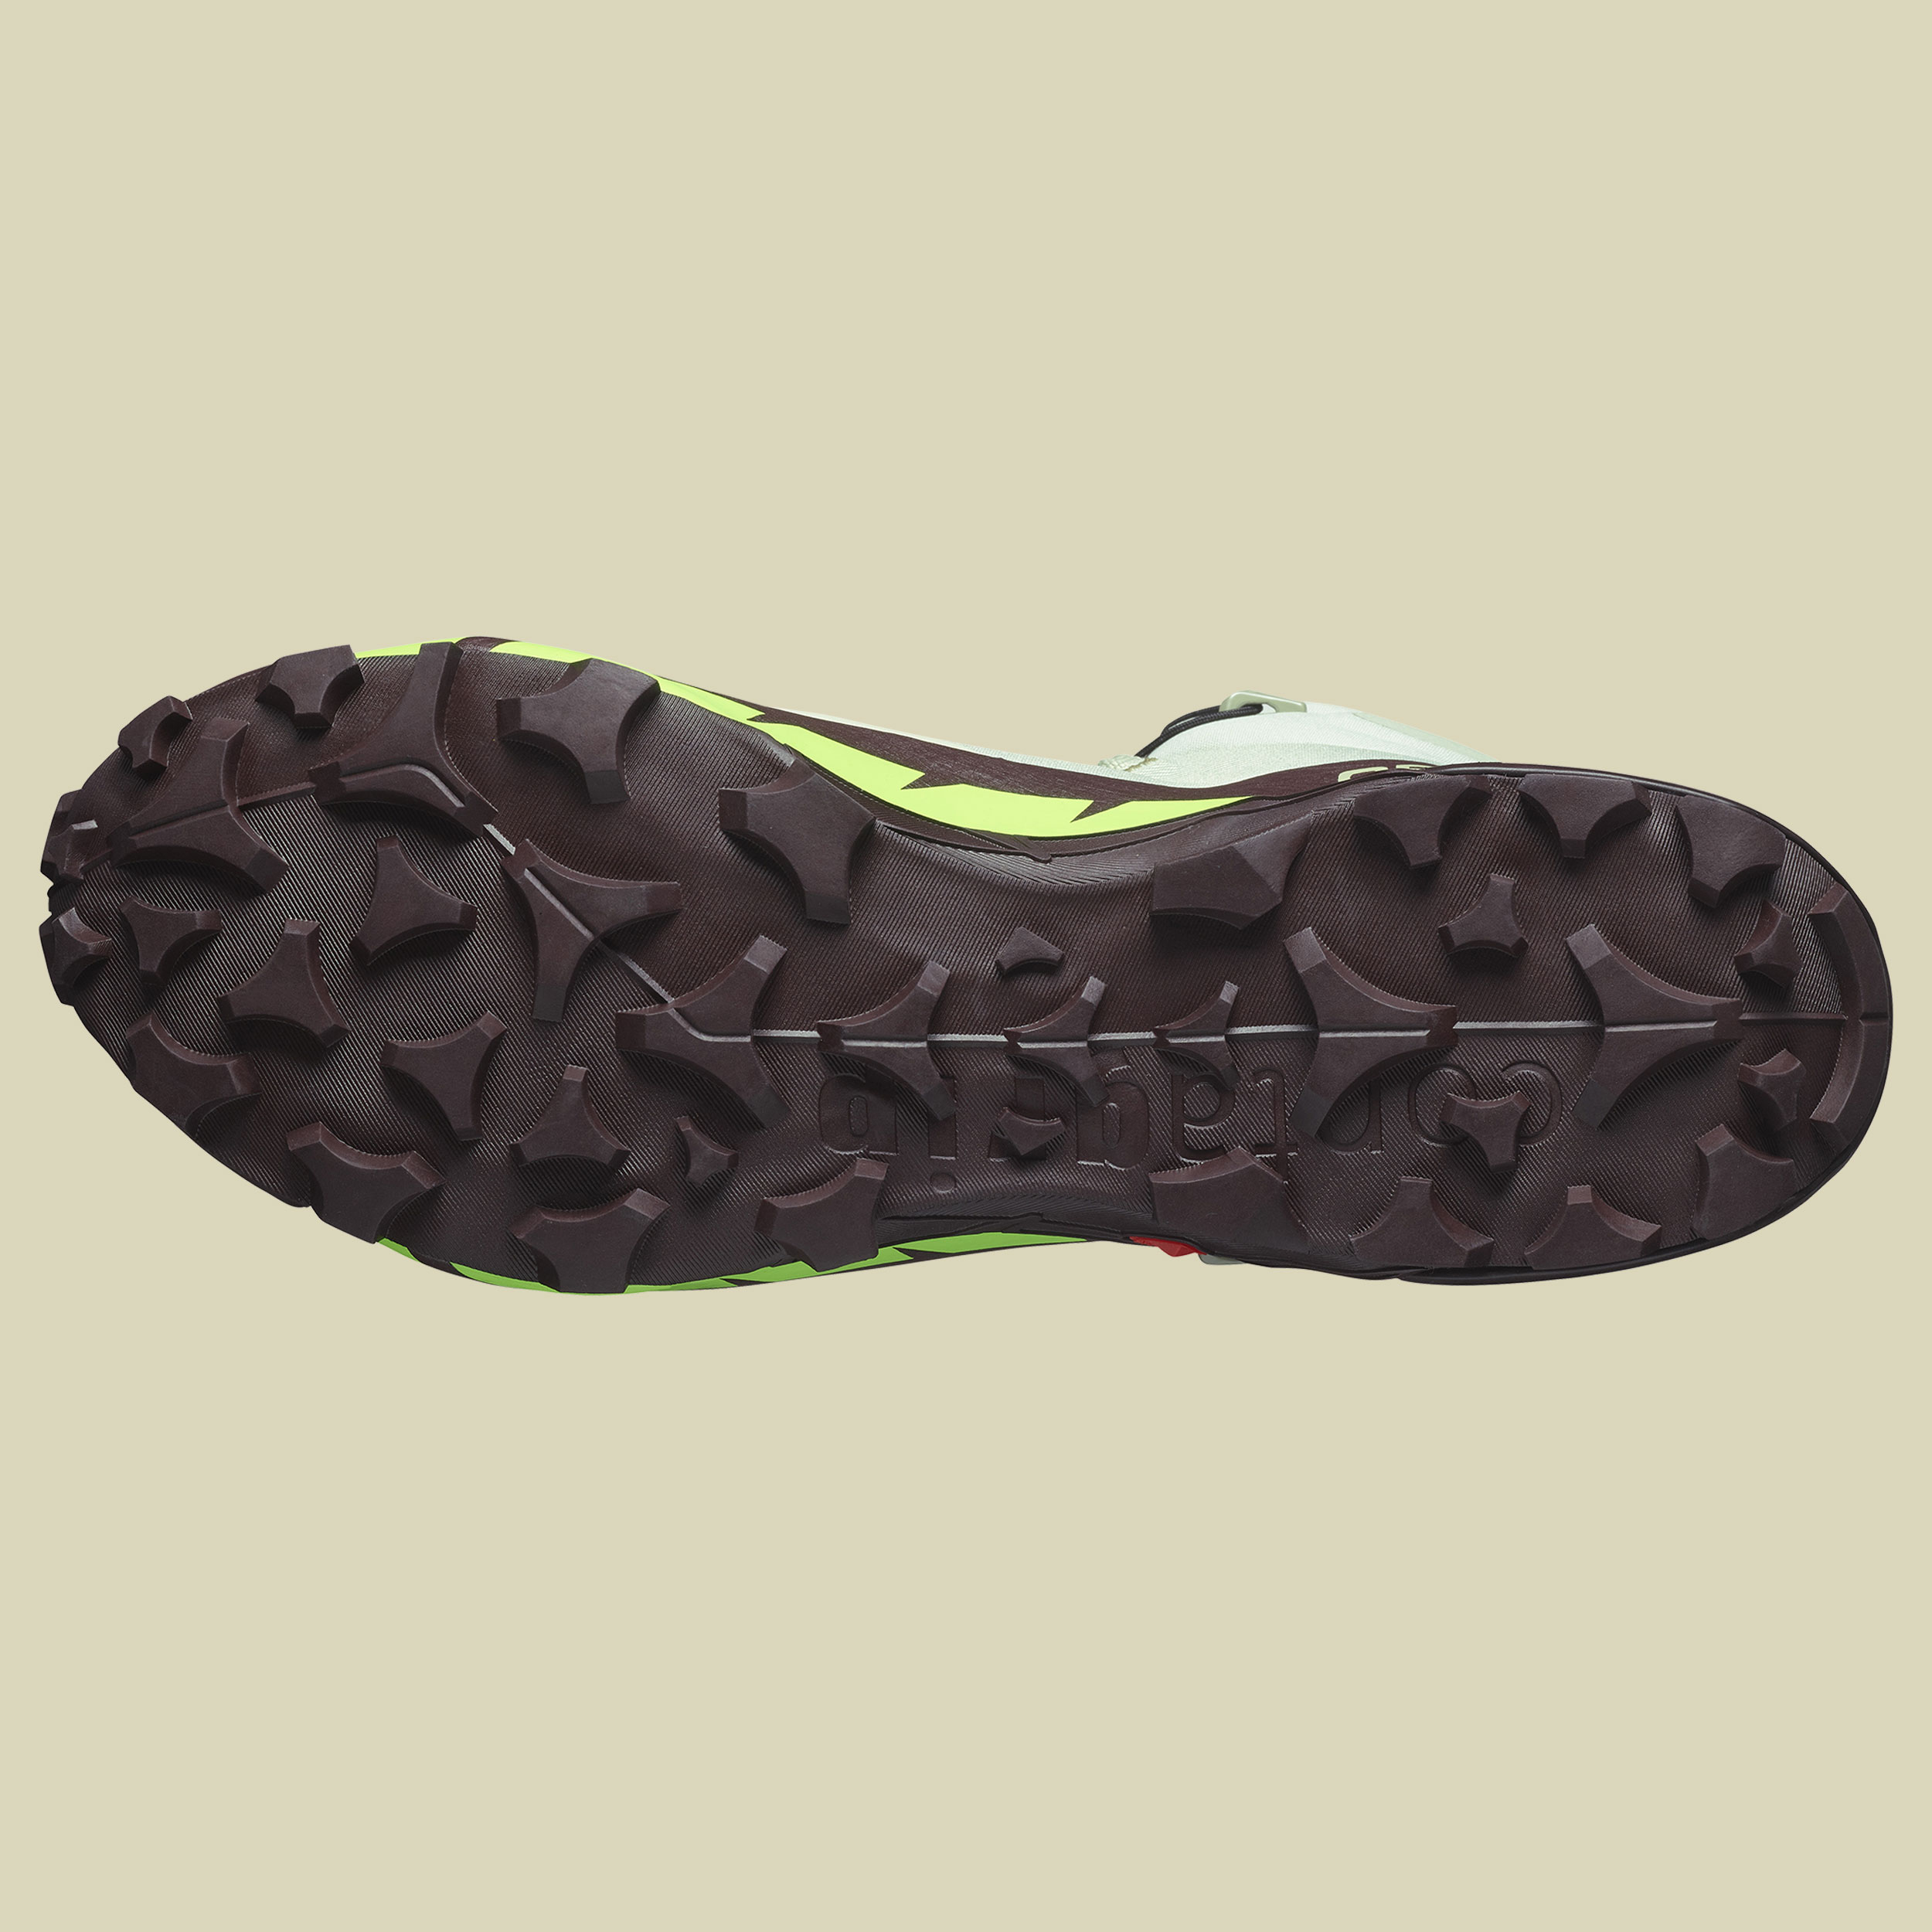 Cross Hike Mid GTX 2 Men Größe UK 11 Farbe desert sage/green gecko/chocolate plum